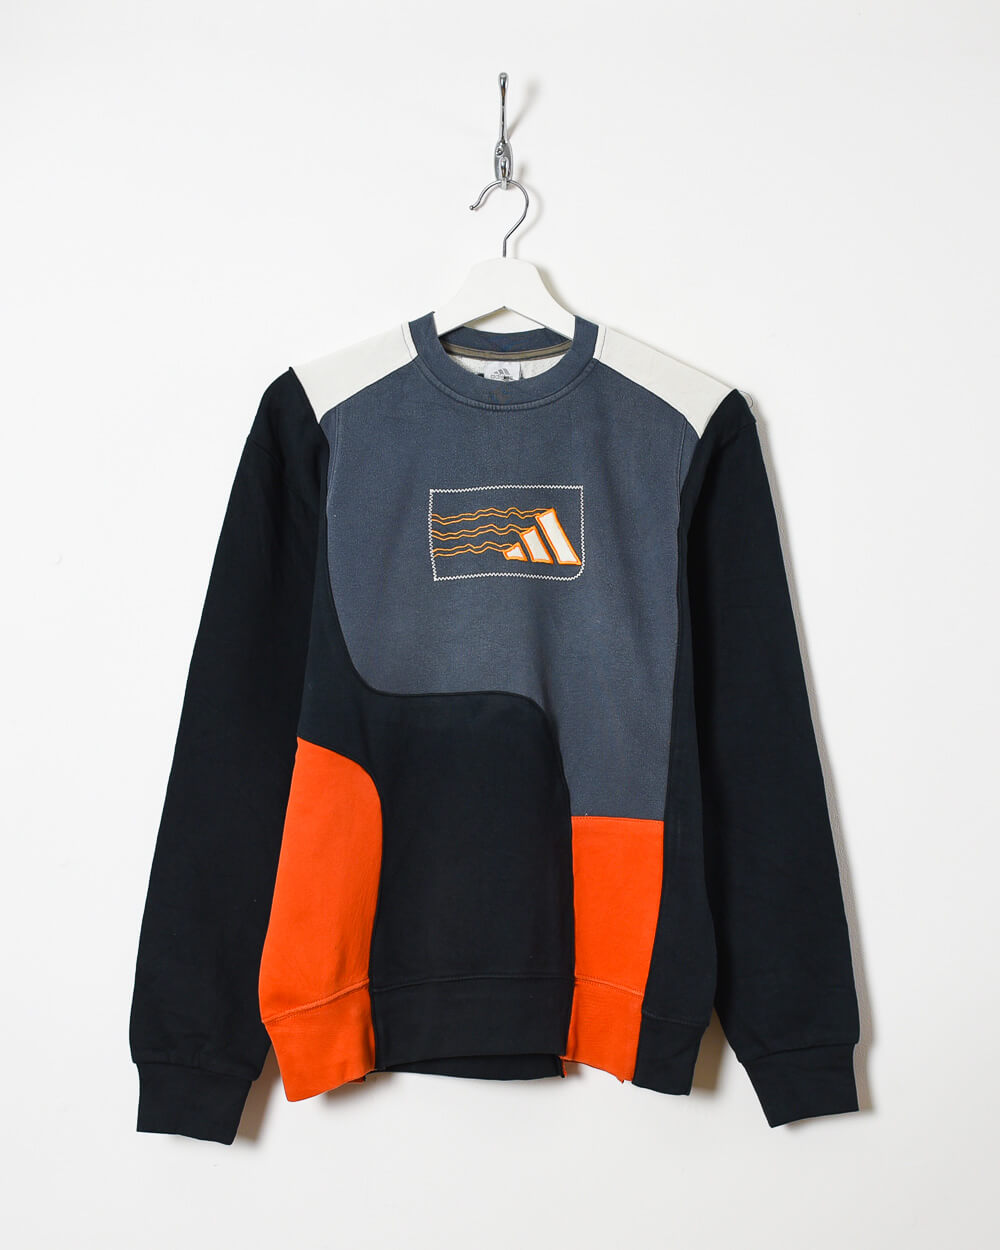 Black Adidas Rework Sweatshirt - Small